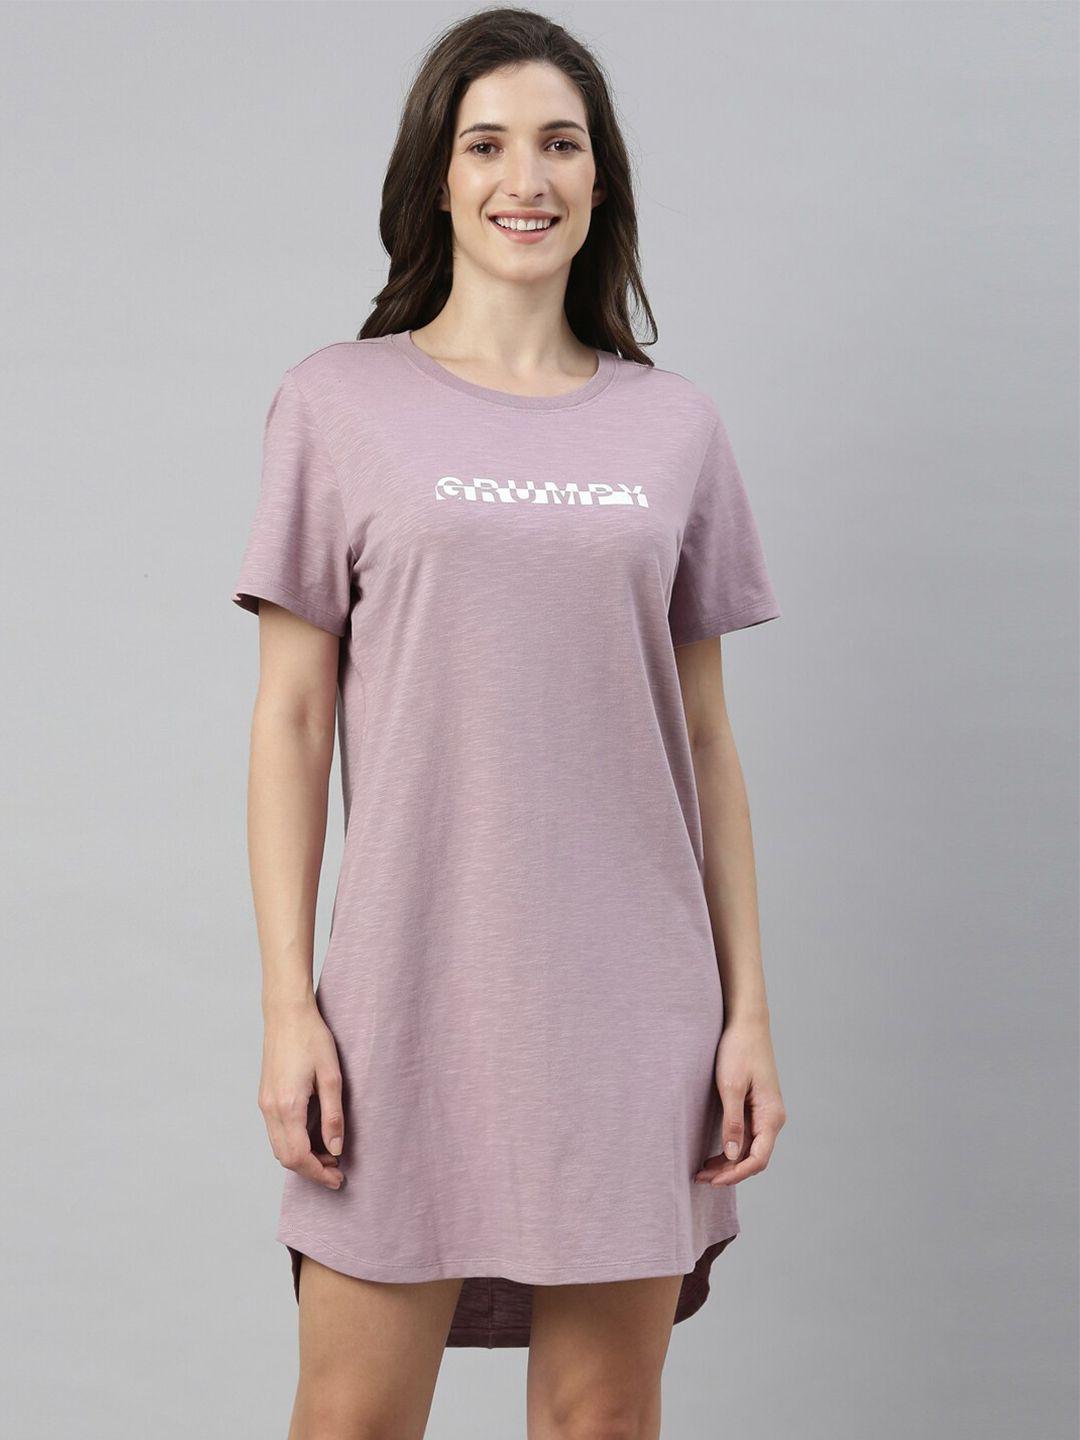 enamor typography printed pure cotton t-shirt nightdress